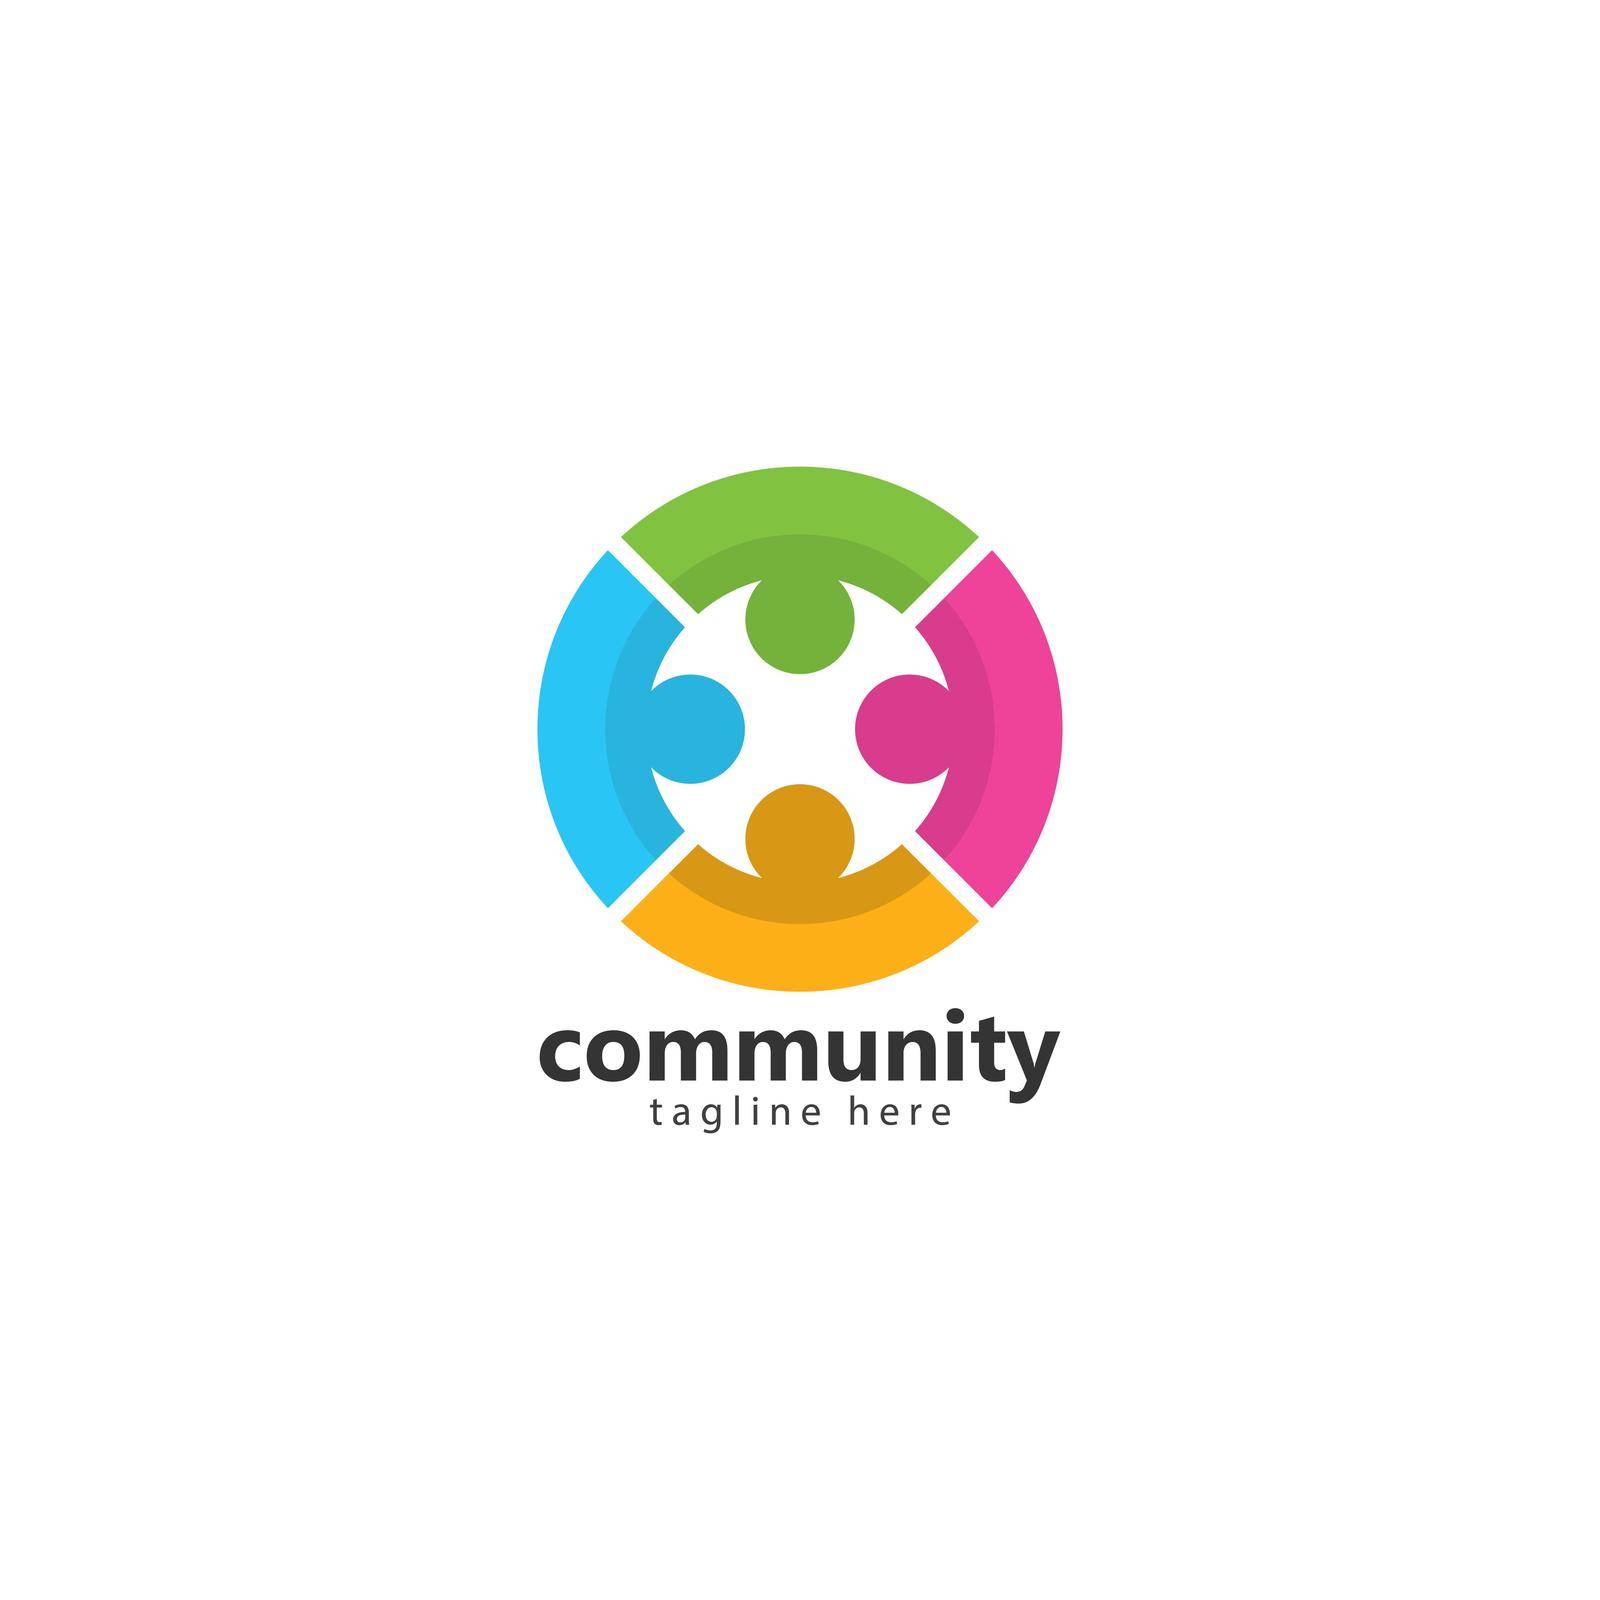 Adoption and community care Logo template vector by kosasihindra55